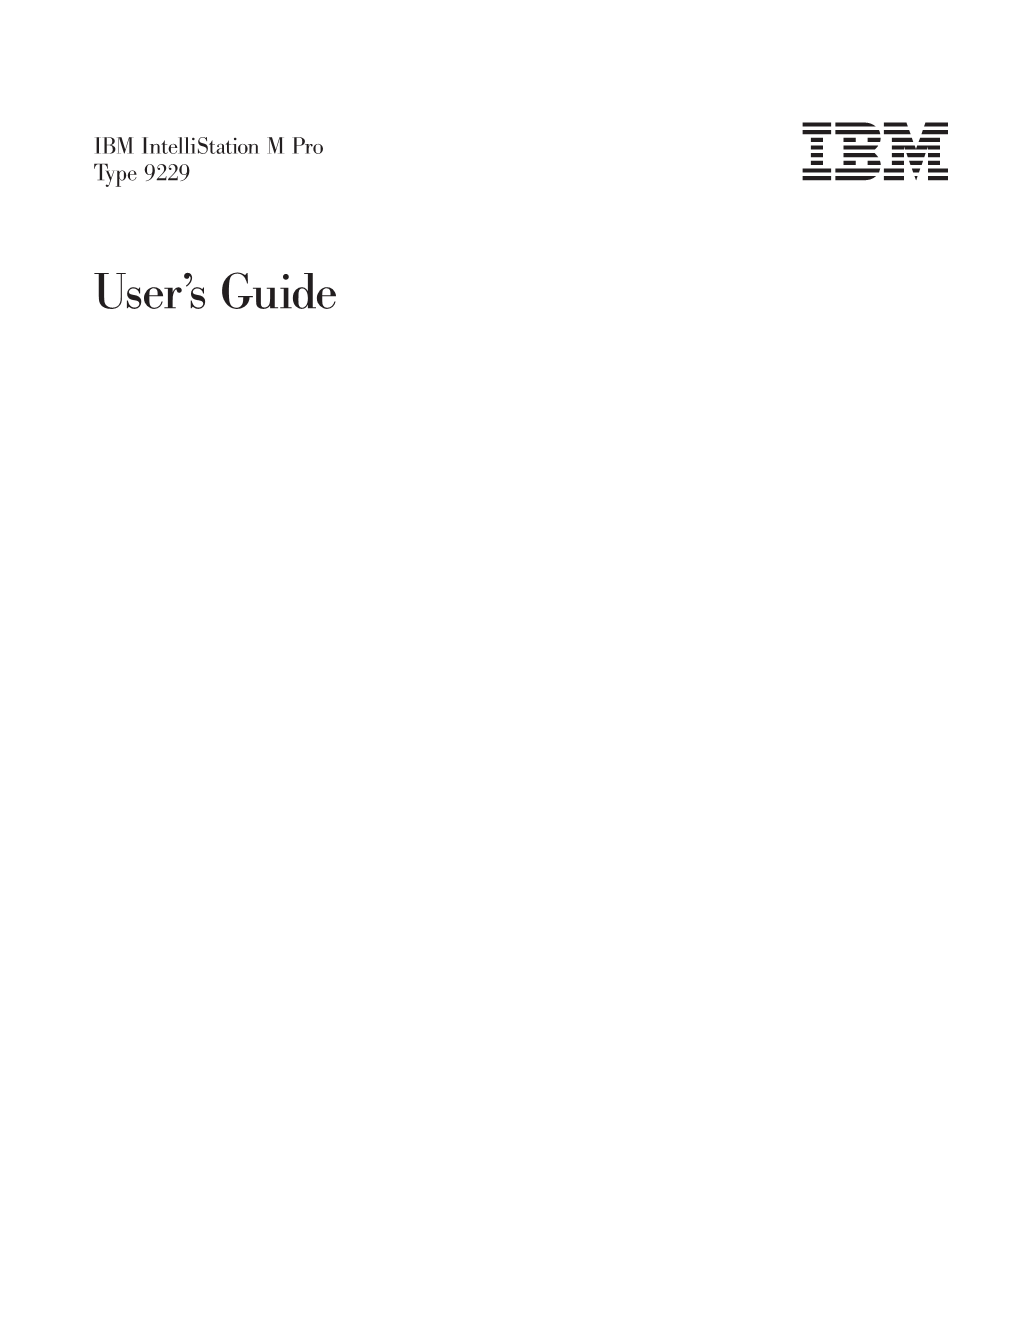 IBM Intellistation M Pro Type 9229: User’S Guide